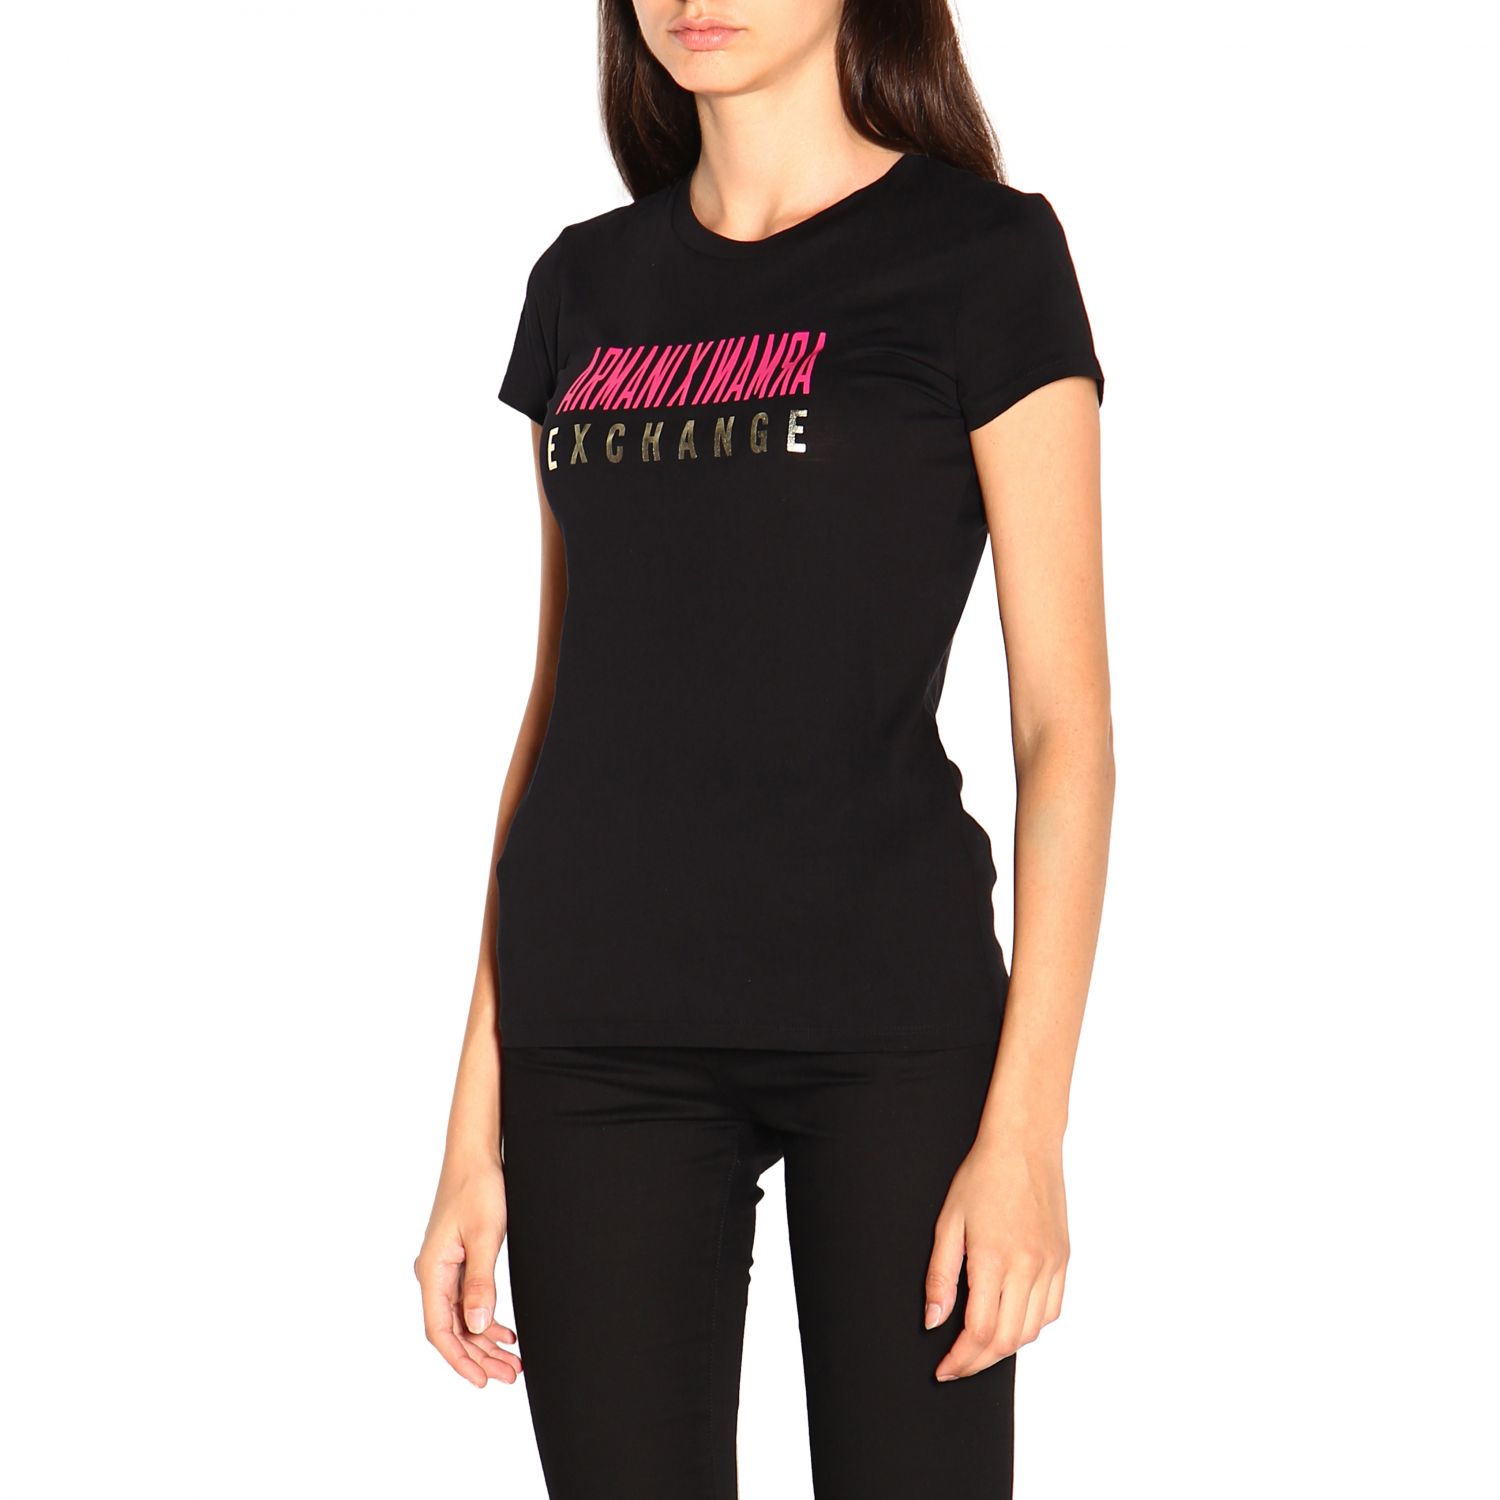 Armani Exchange Outlet: t-shirt for women - Black | Armani Exchange t ...